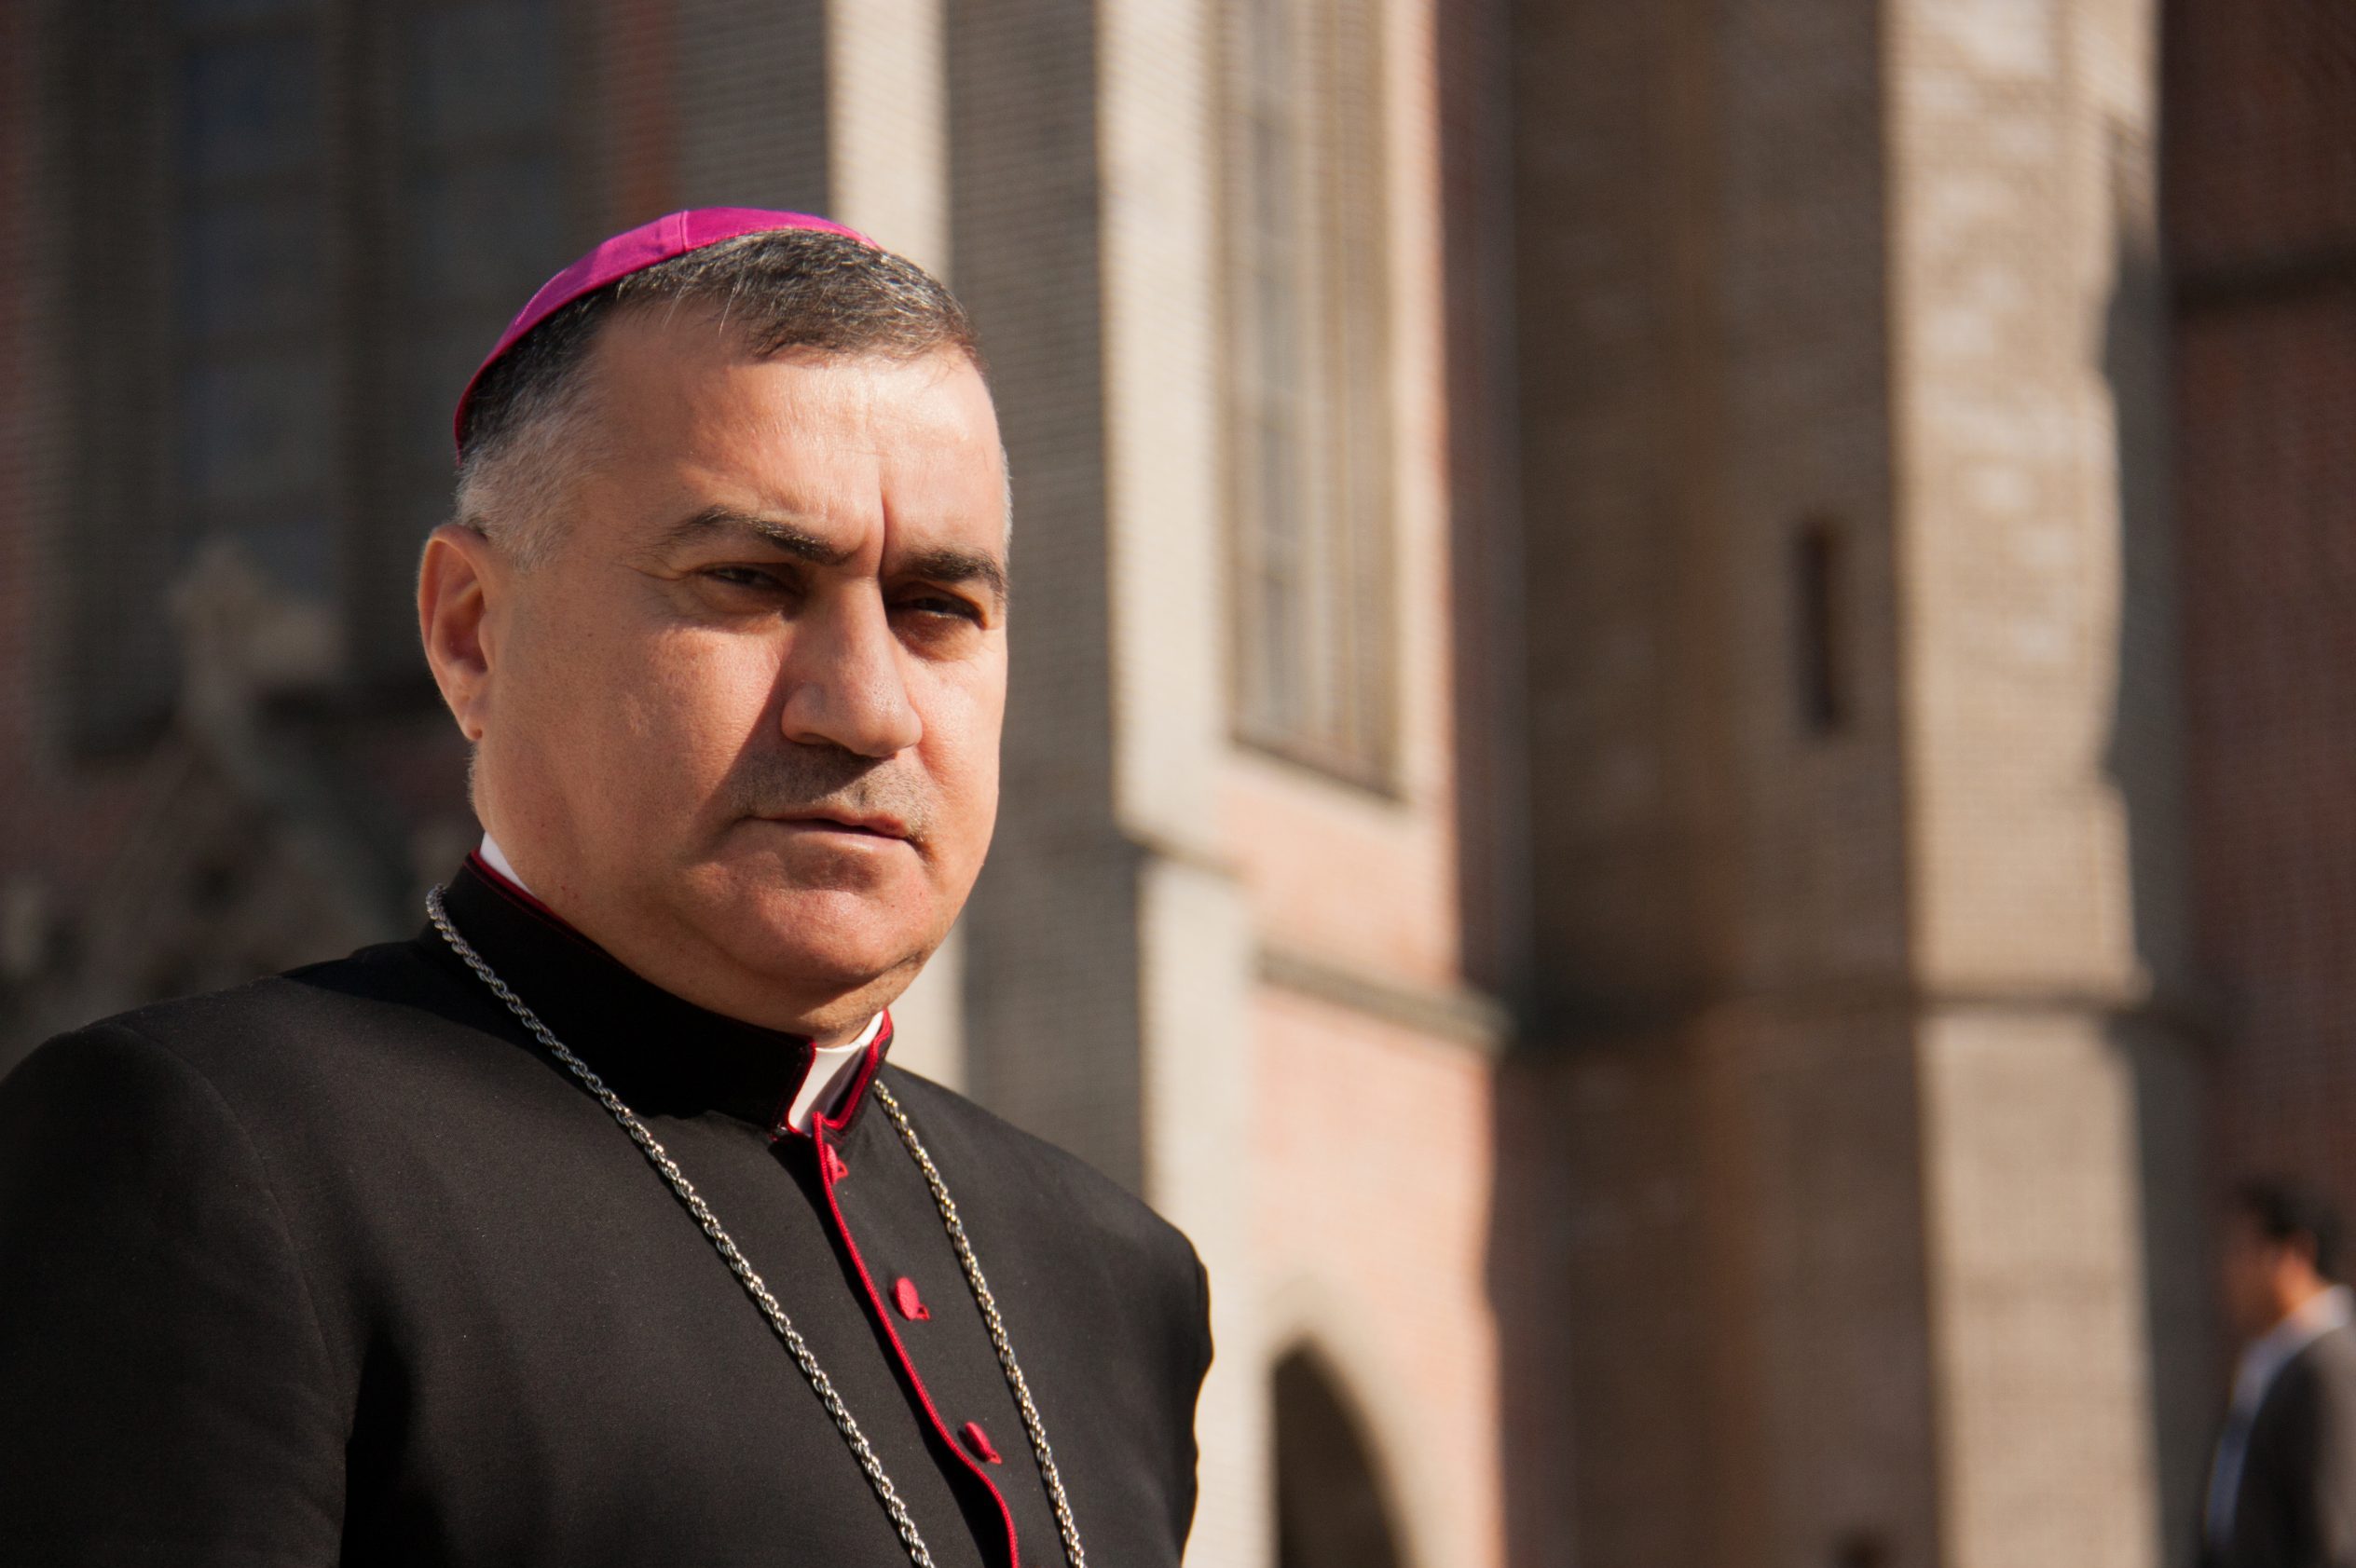 Chaldean Catholic Archbishop Bashar Warda of Erbil (© Aid to the Church in Need)